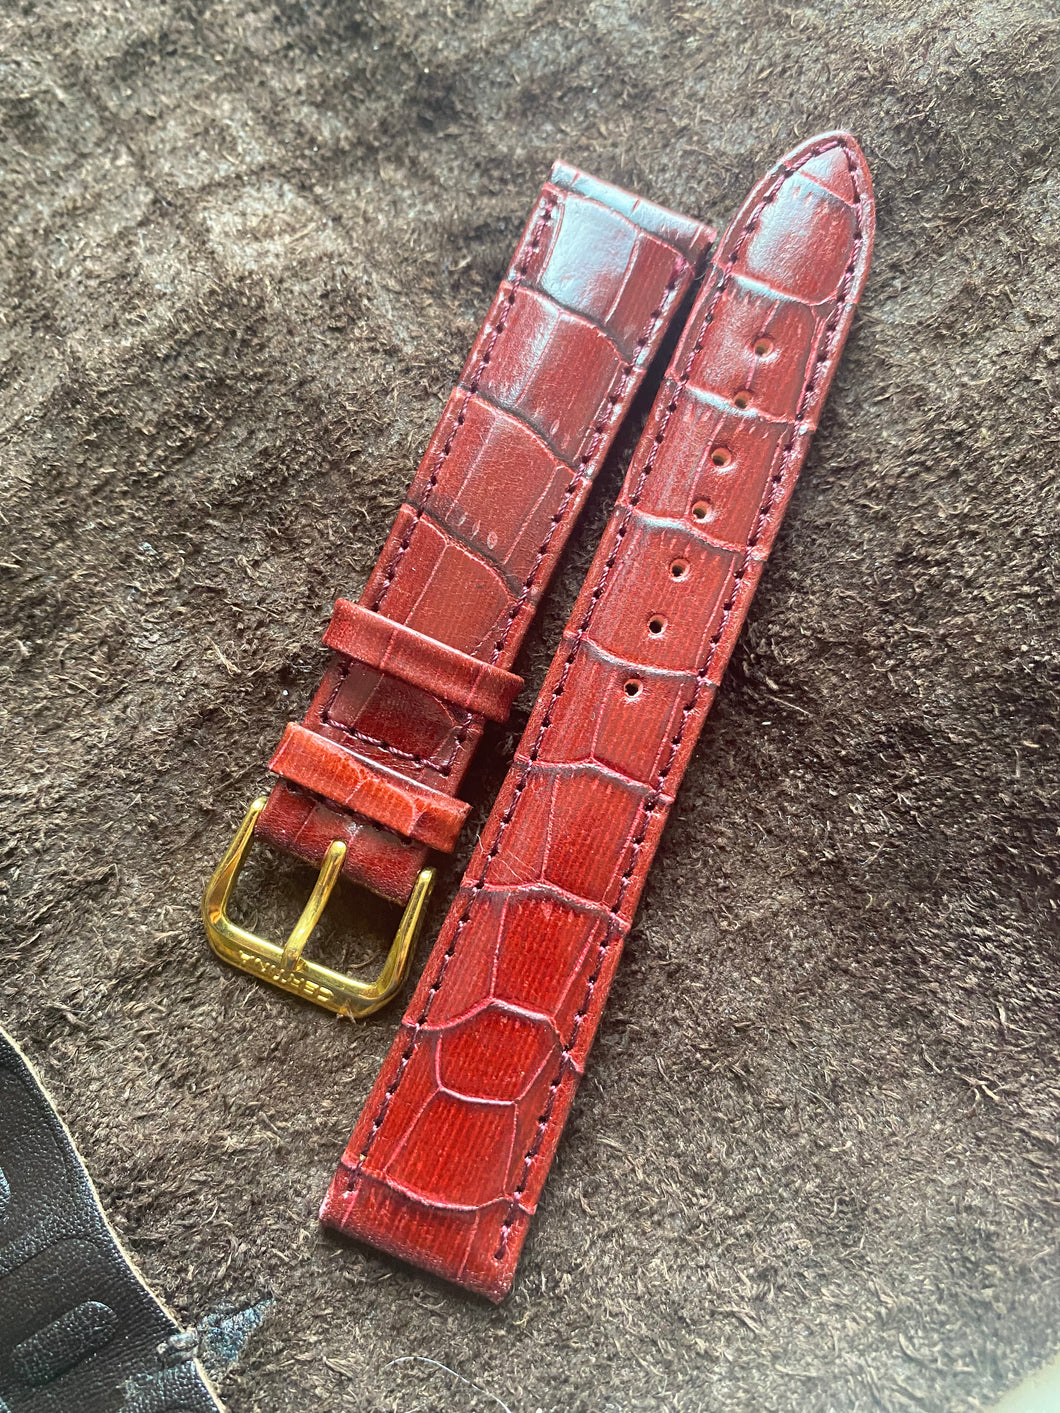 18mm/16mm Original Certina strap and buckle